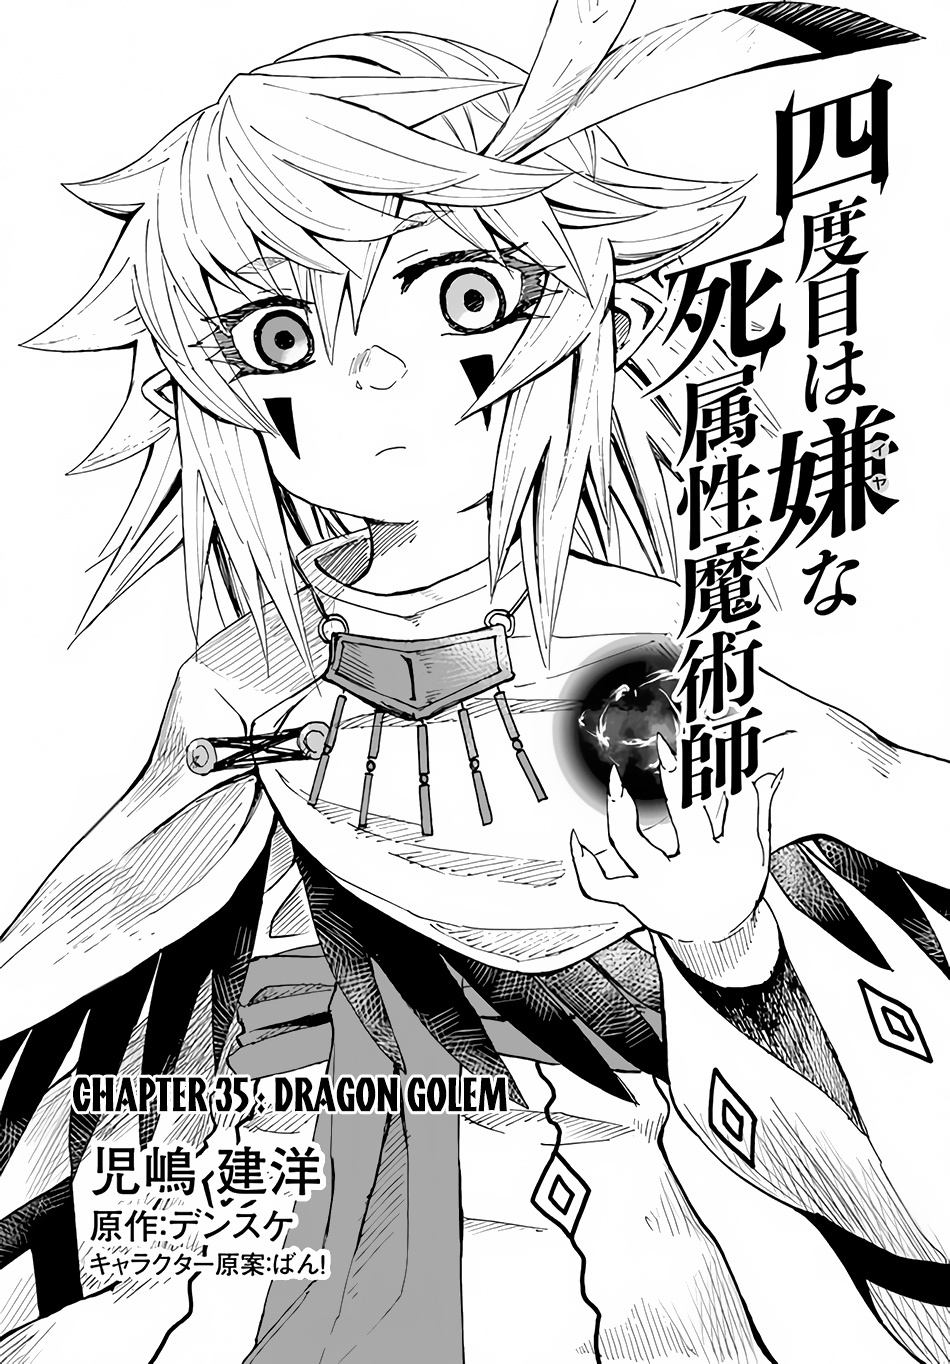 Yondome Wa Iya Na Shizokusei Majutsushi Chapter 35: Dragon Golem - Picture 2